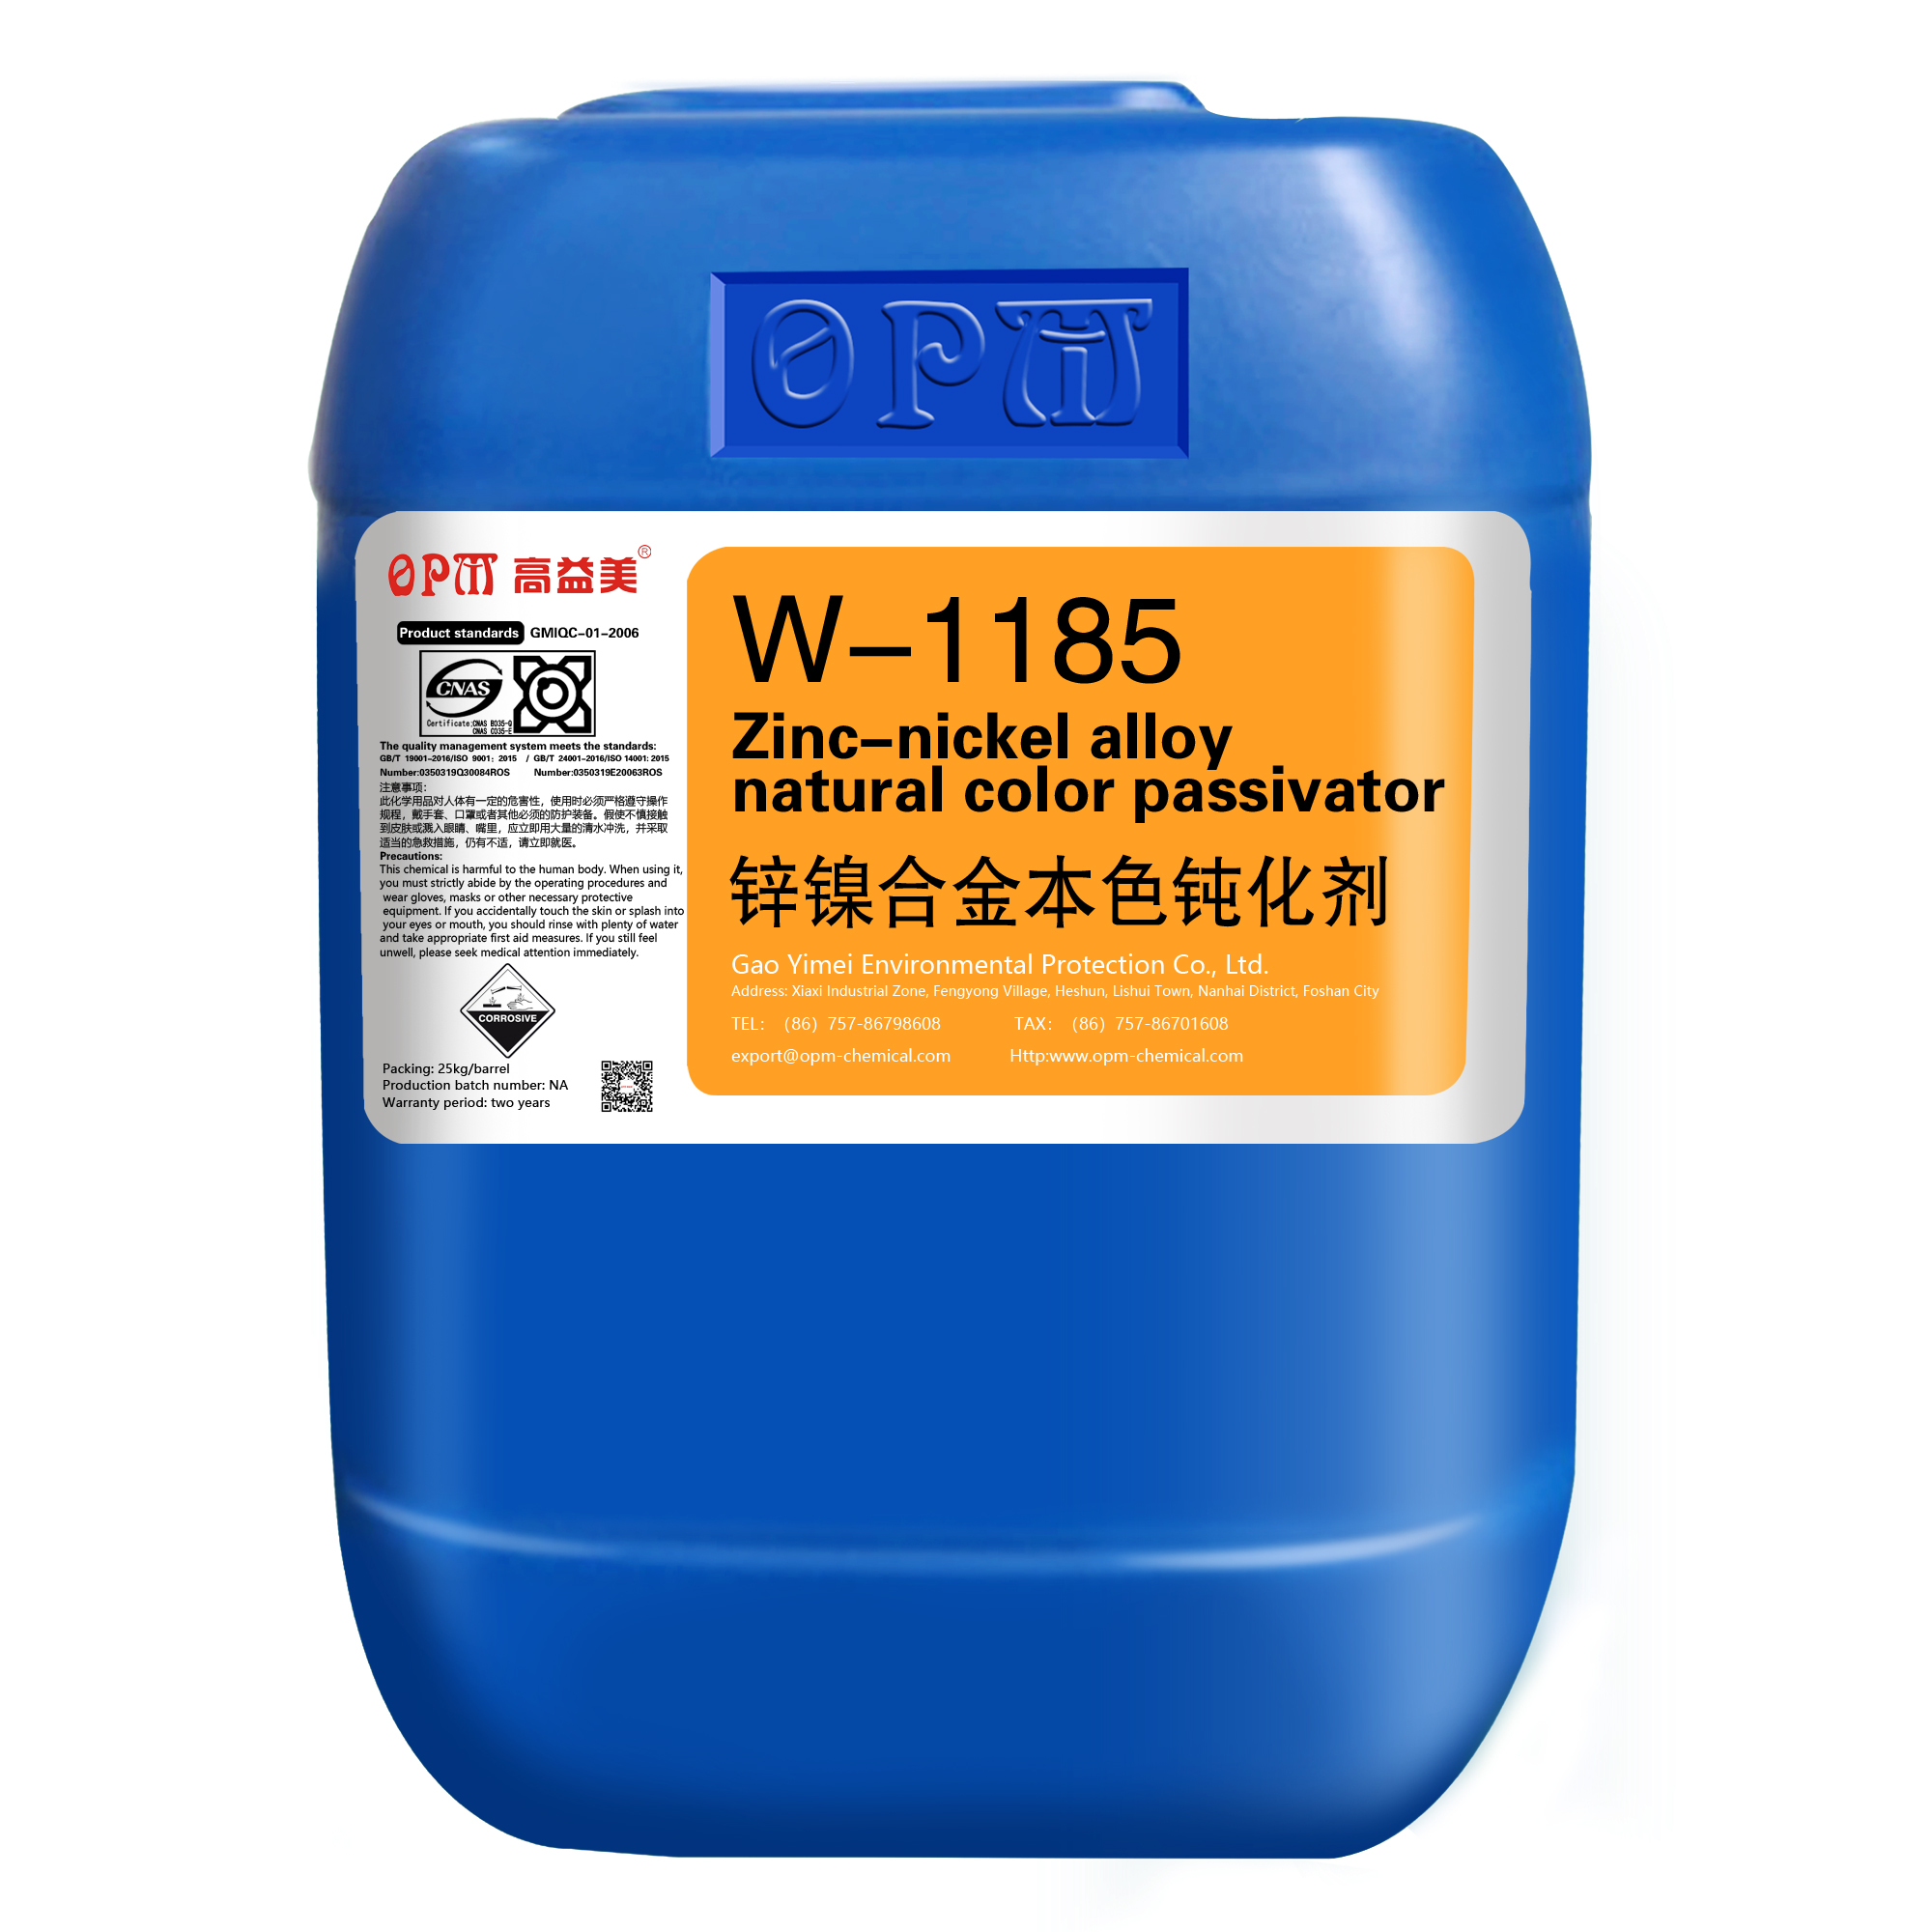 W-1185 Natural color passivator for Zinc-nickel alloy